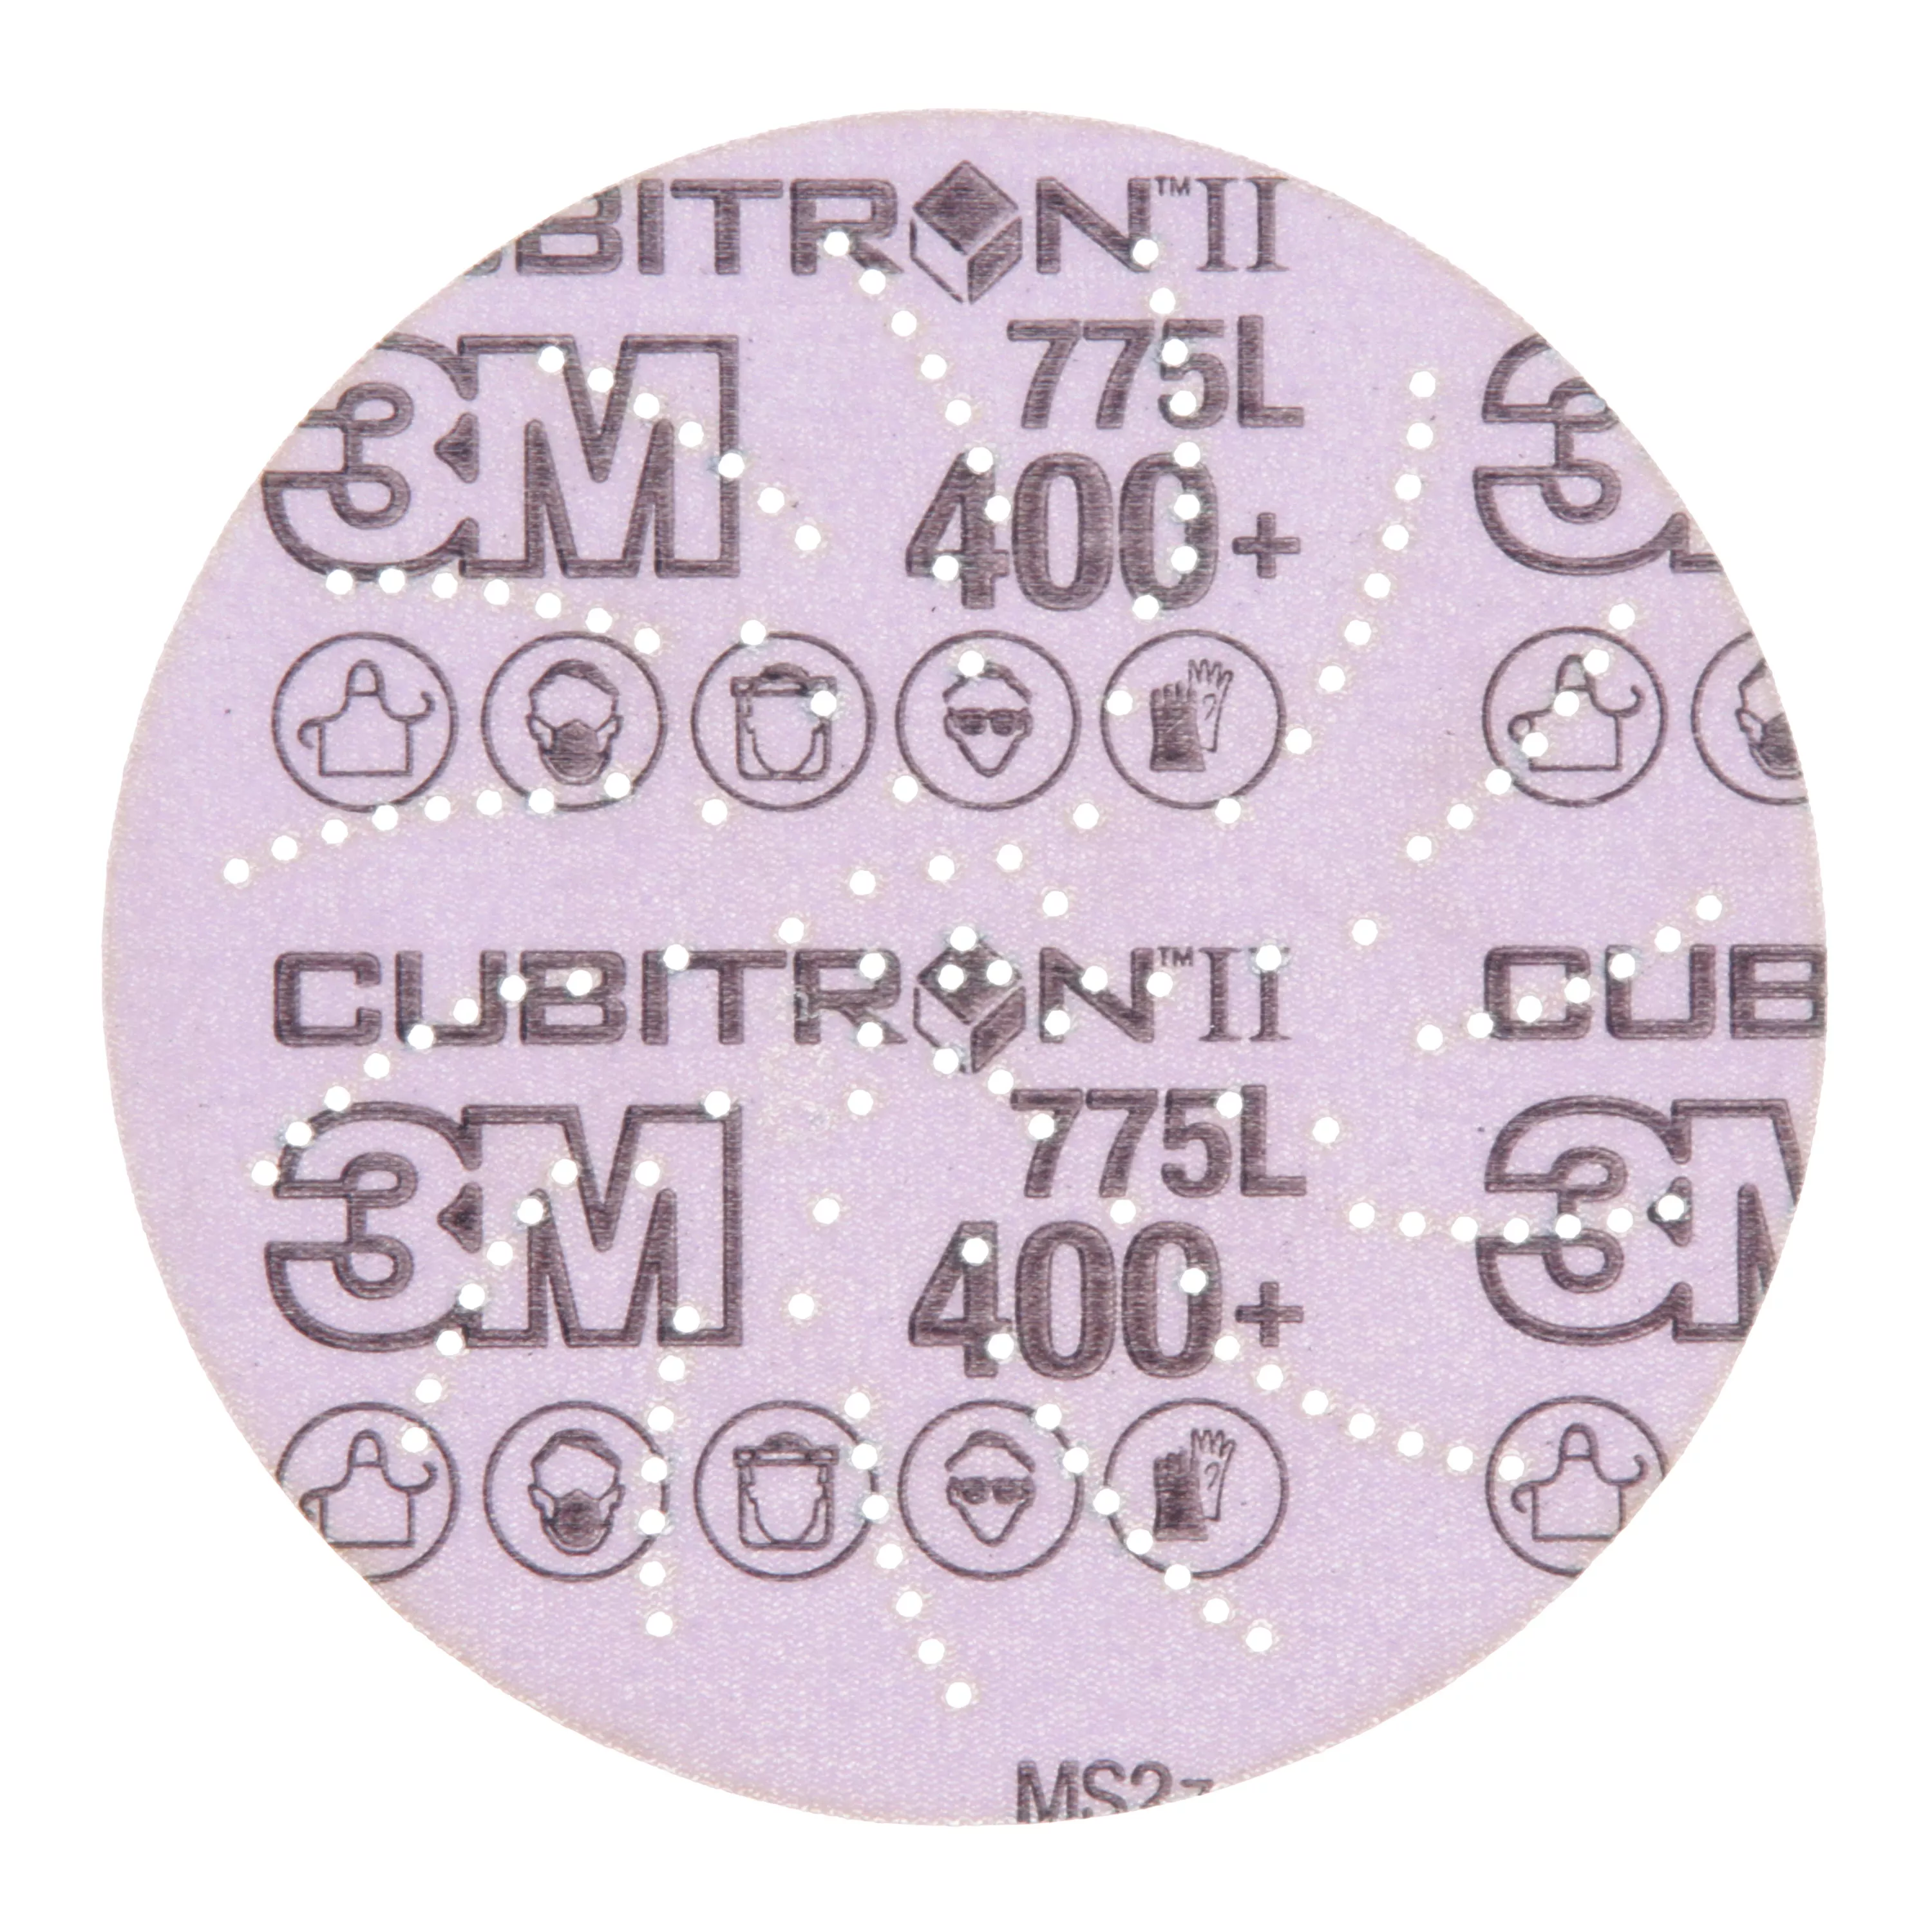 3M Xtract™ Cubitron™ II Film Disc 775L, 400+, 5 in, Die 500LG,
50/Carton, 250 ea/Case